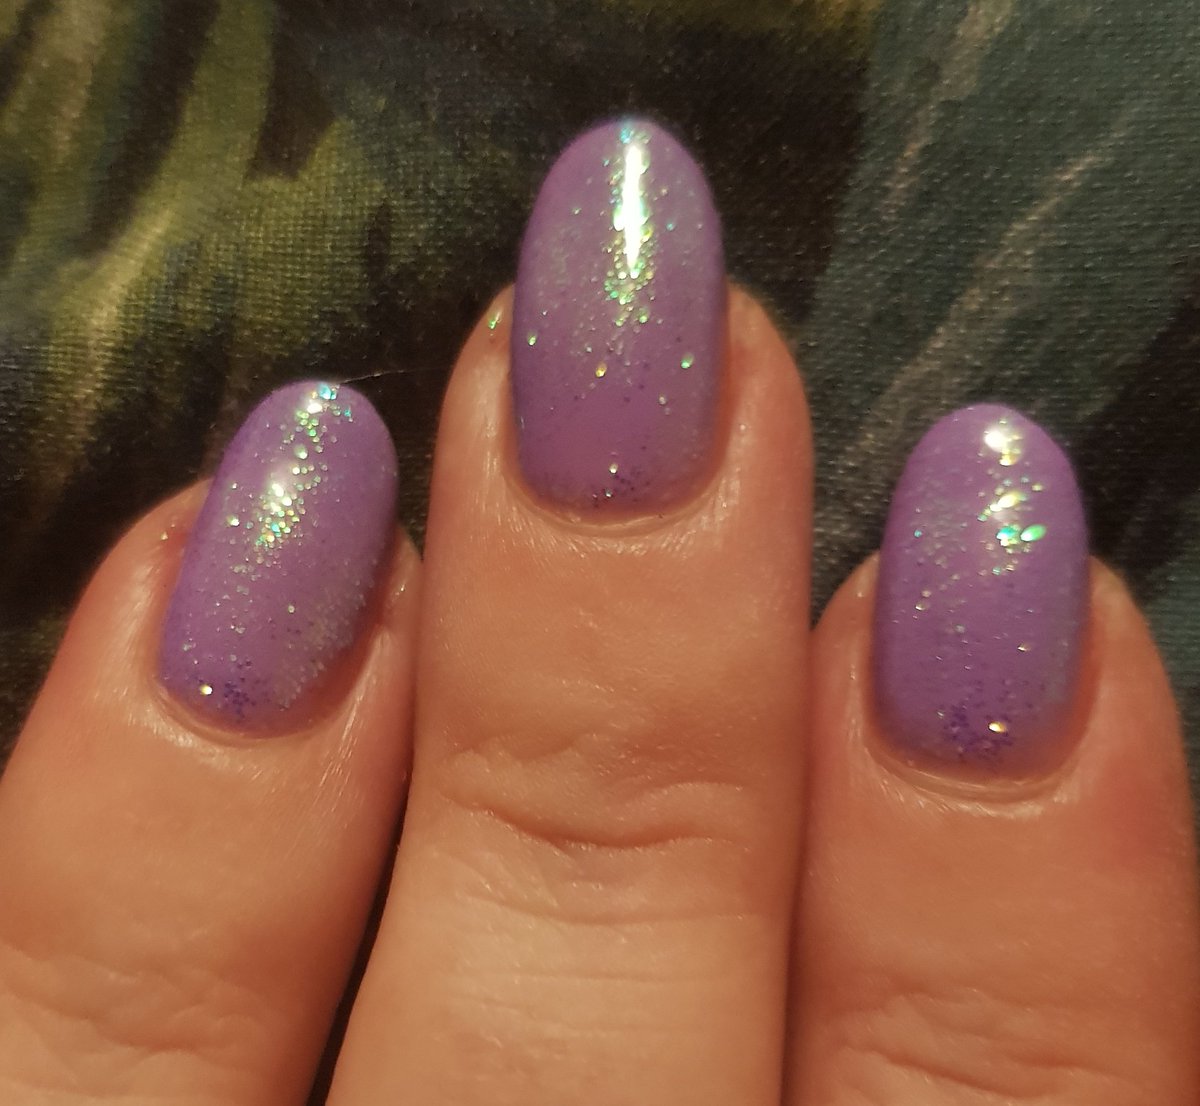 My new colour on my nails what do you guys think 🌈❤🦊
#Vtuber #nailpolishlover #nailpolishaddict